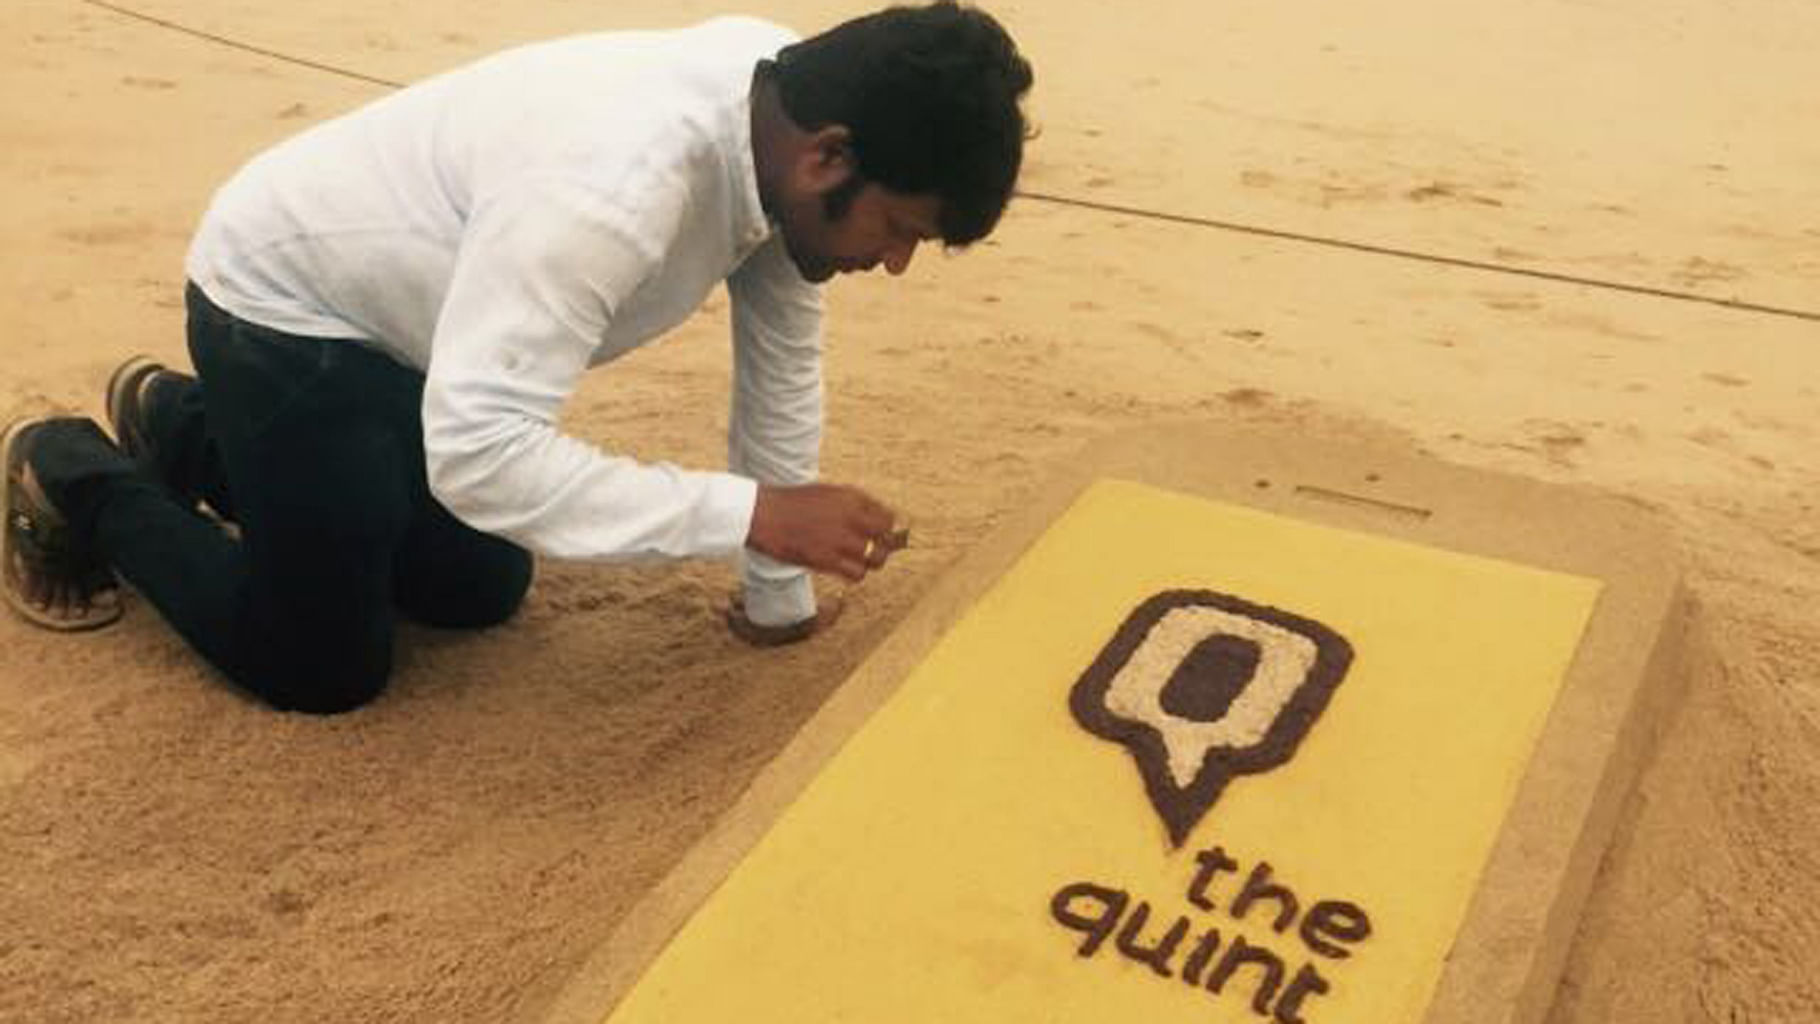 Sudarsan Pattnaik carving some beautiful sand art for The Quint. (Photo Courtesy: Sudarsan Pattnaik)